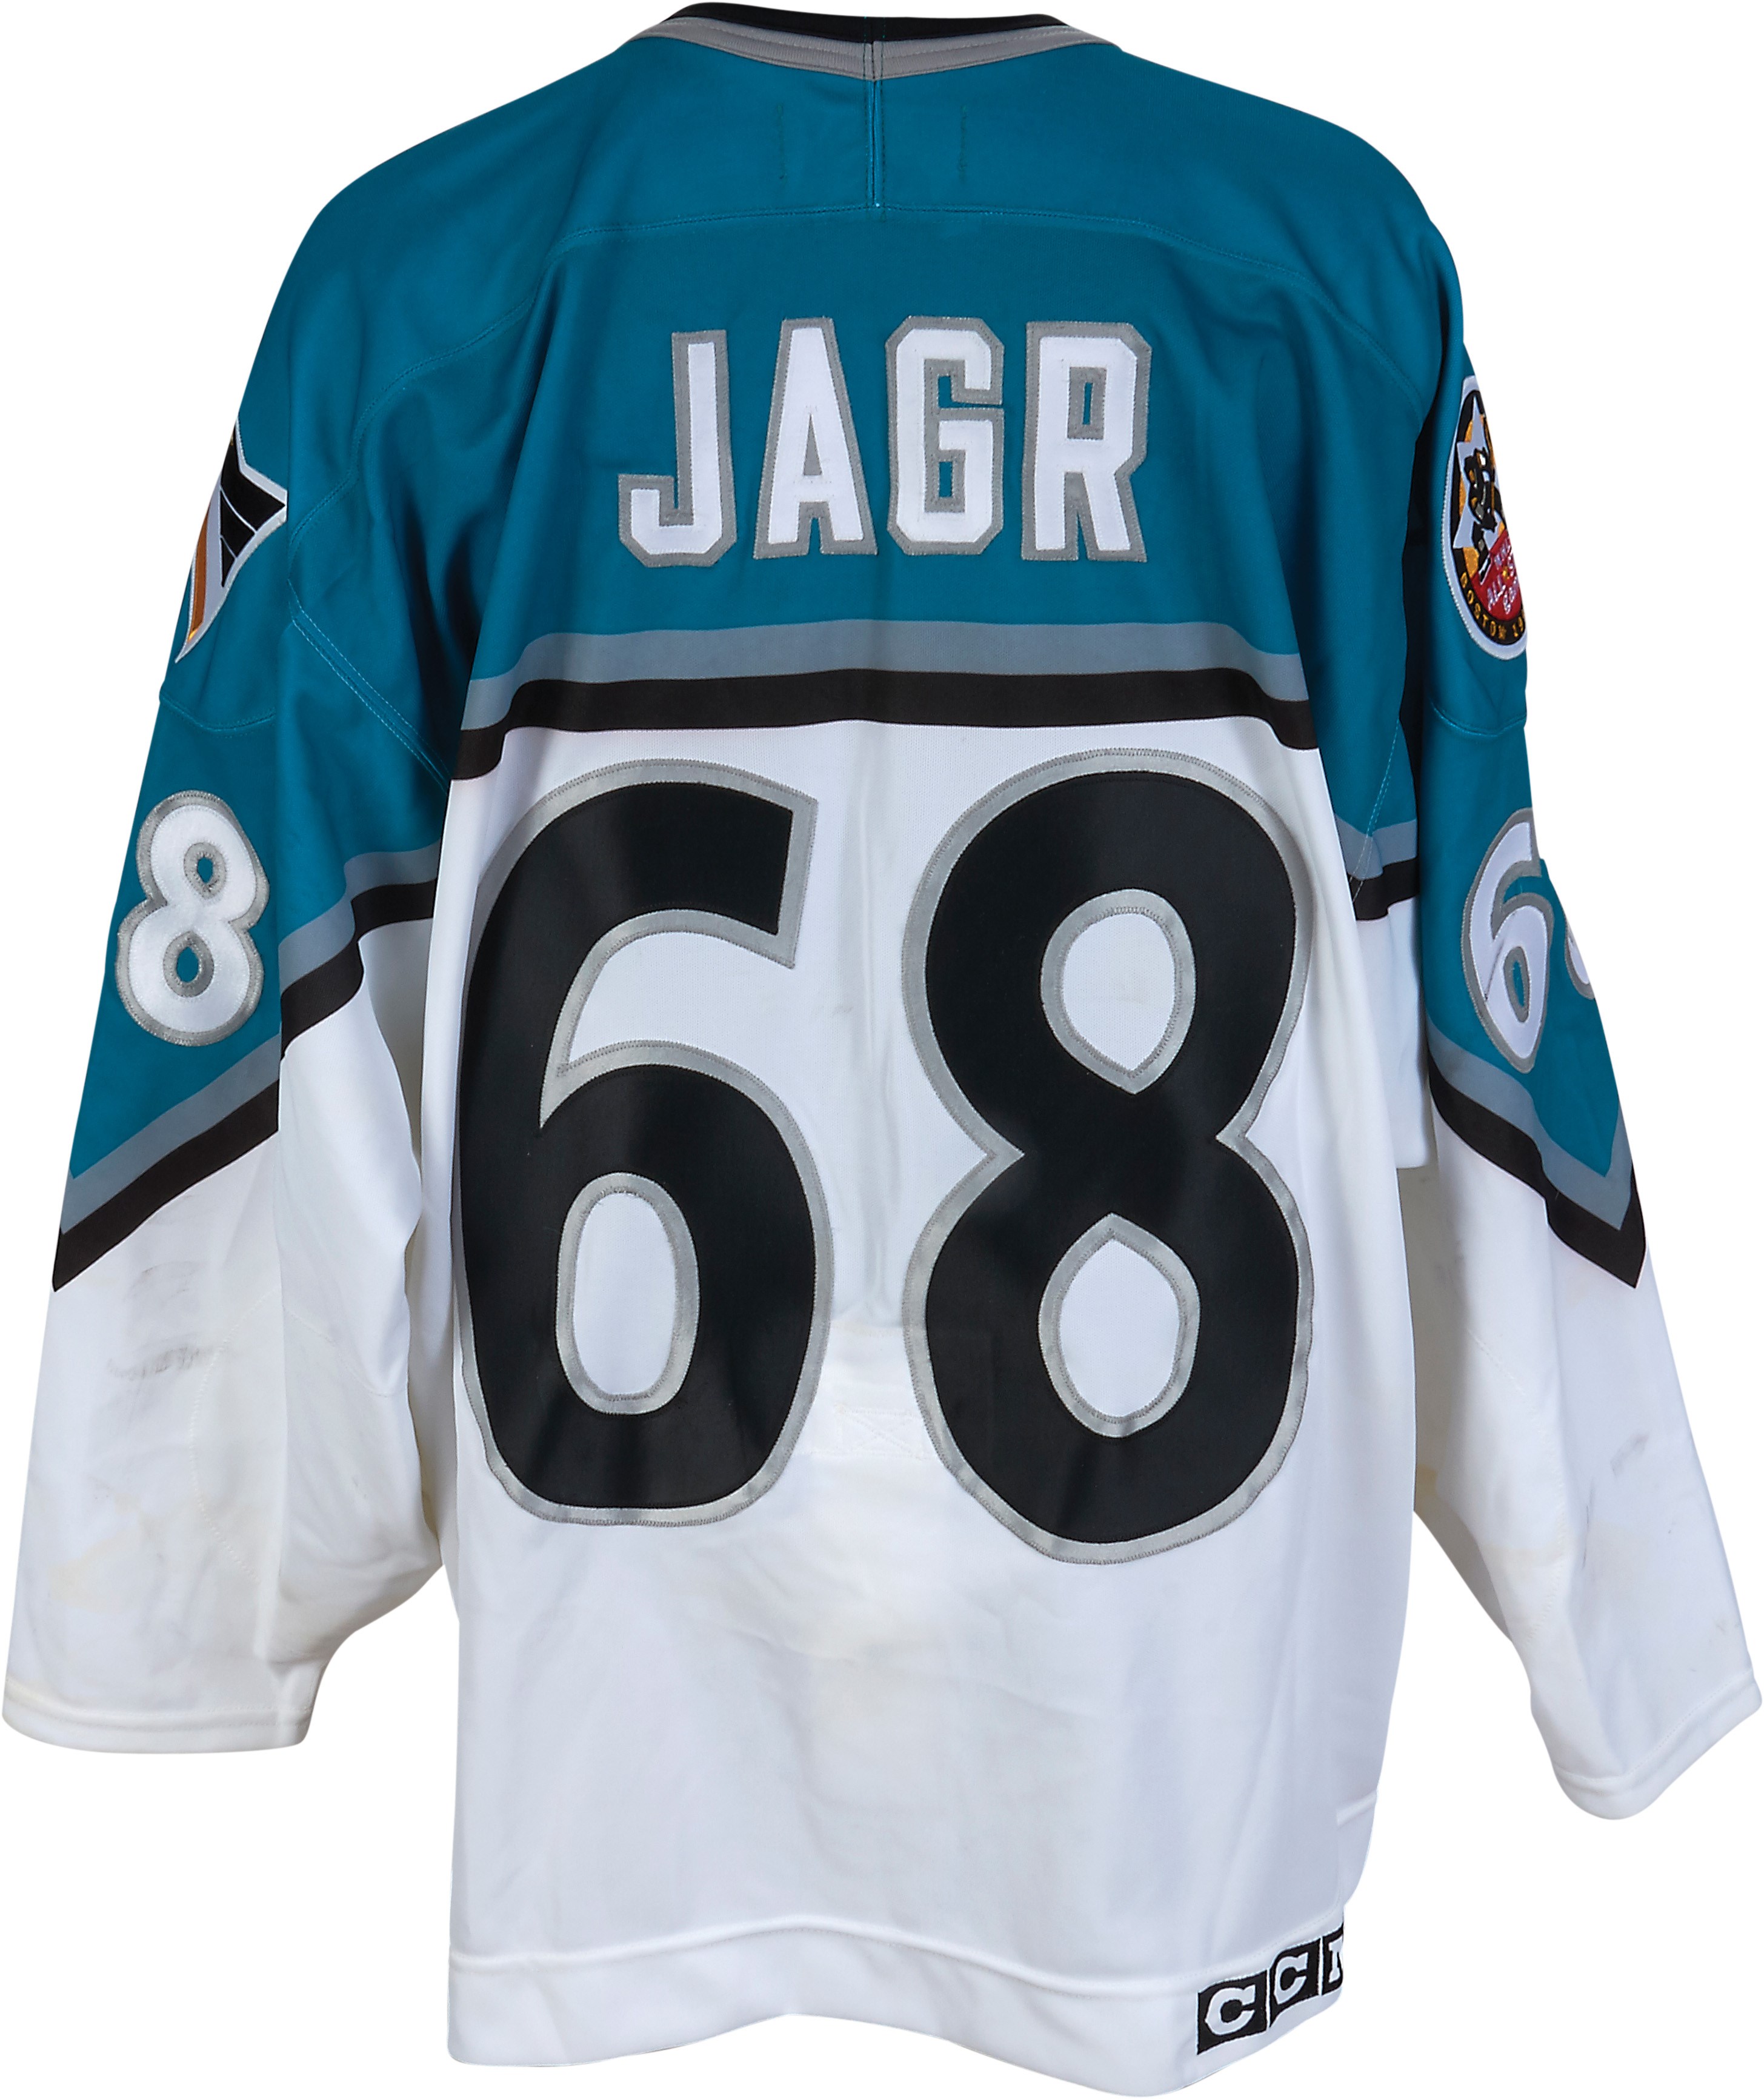 Hockey - 1996 Jaromir Jagr NHL All-Star Game Worn Jersey (Photo-Matched)